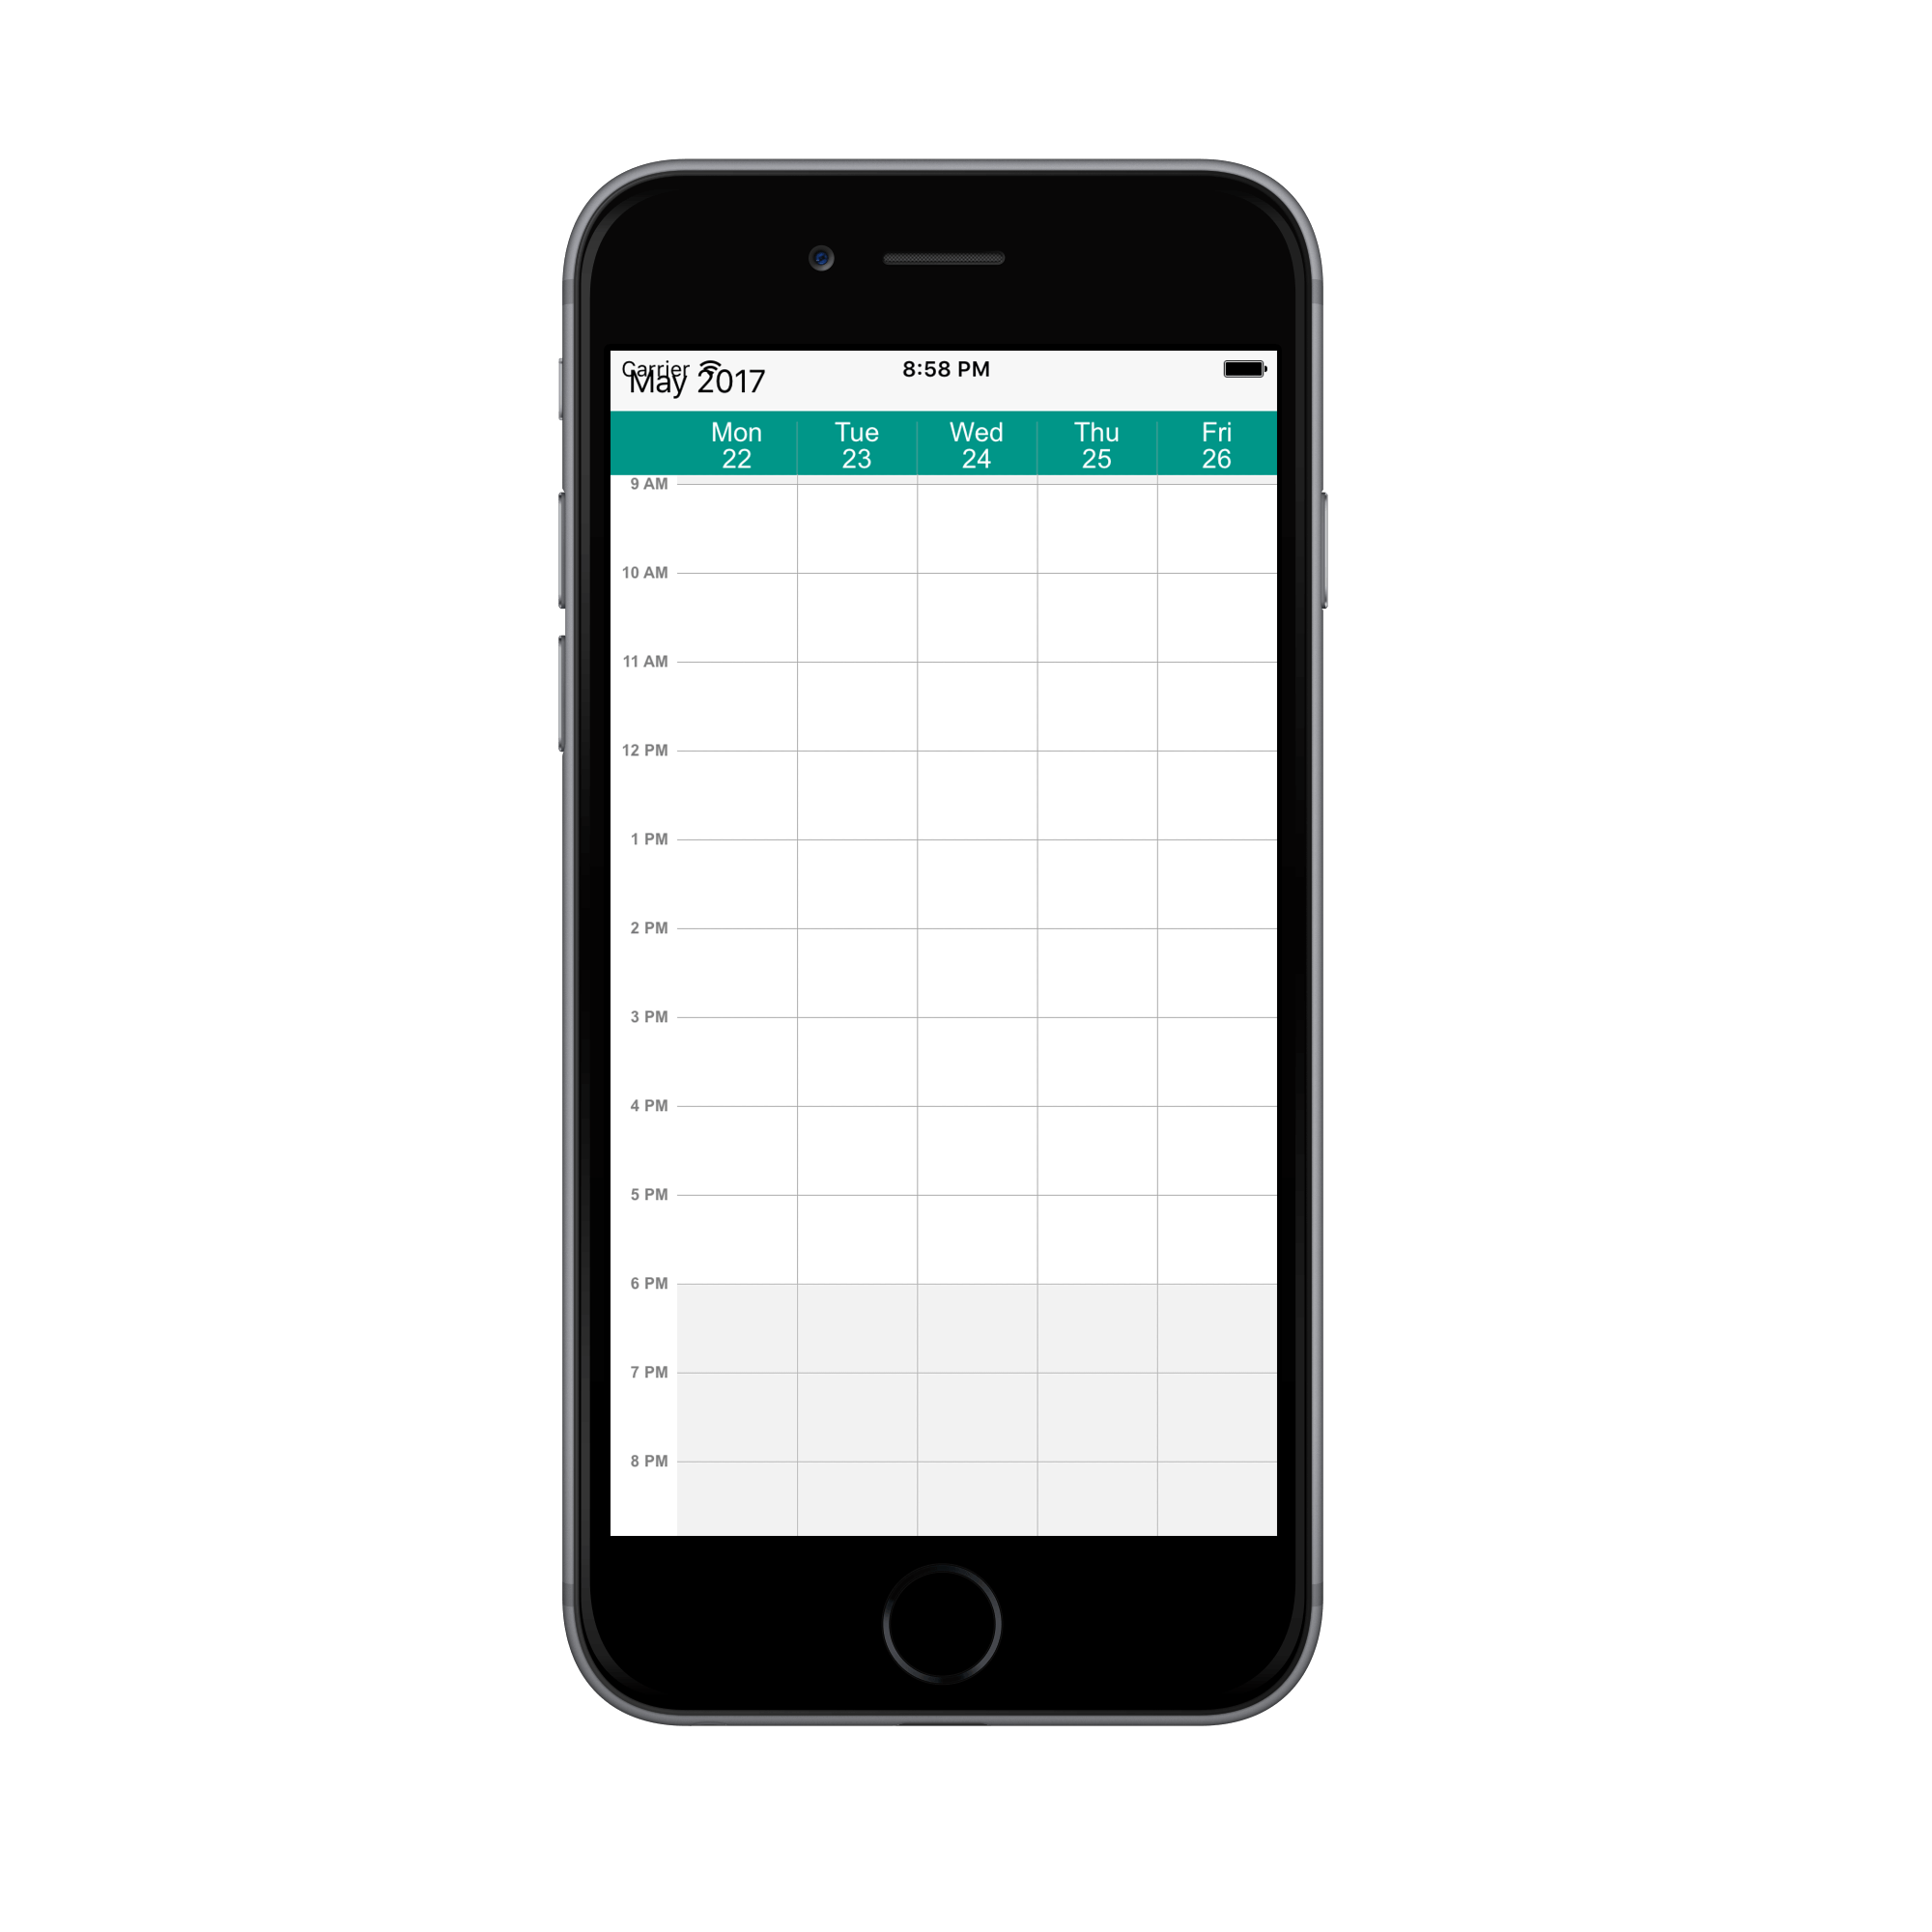 Work week view view header appearance customization in schedule for Xamarin.iOS